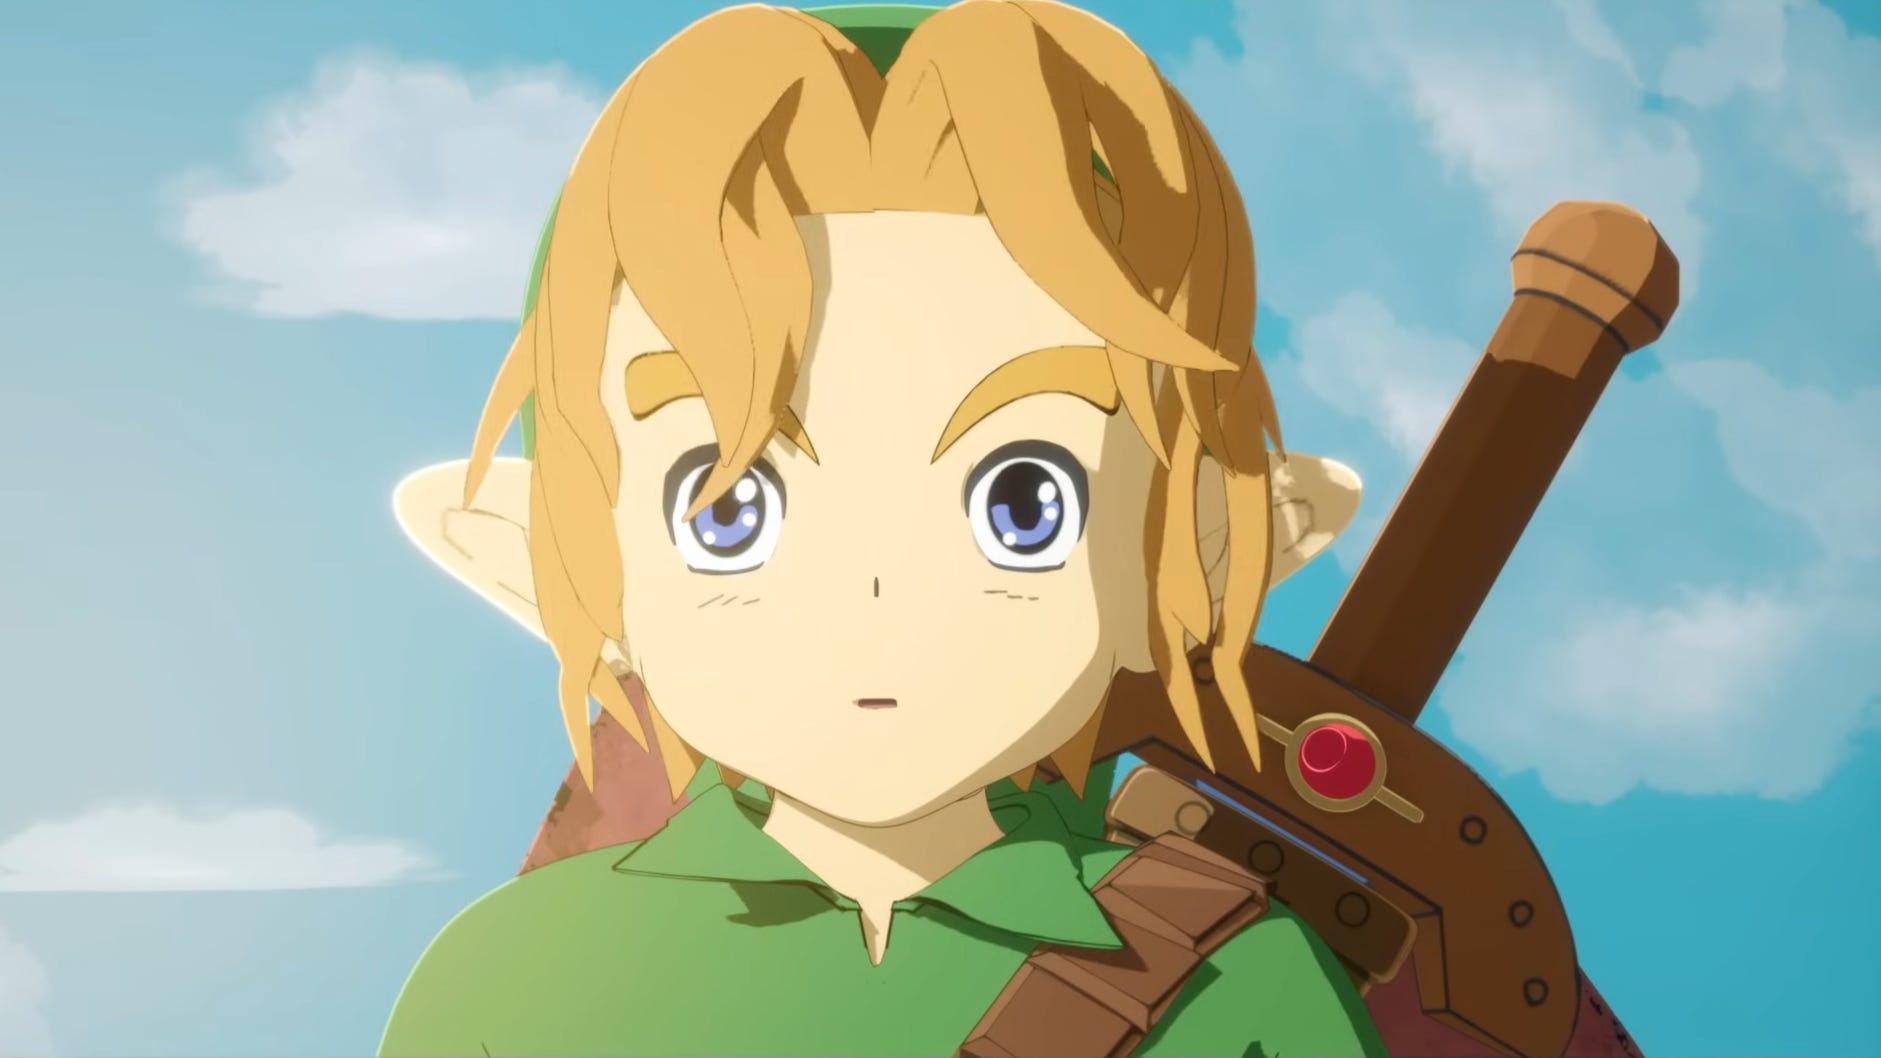 Fan recreates The Legend of Zelda as a Studio Ghibli film thumbnail